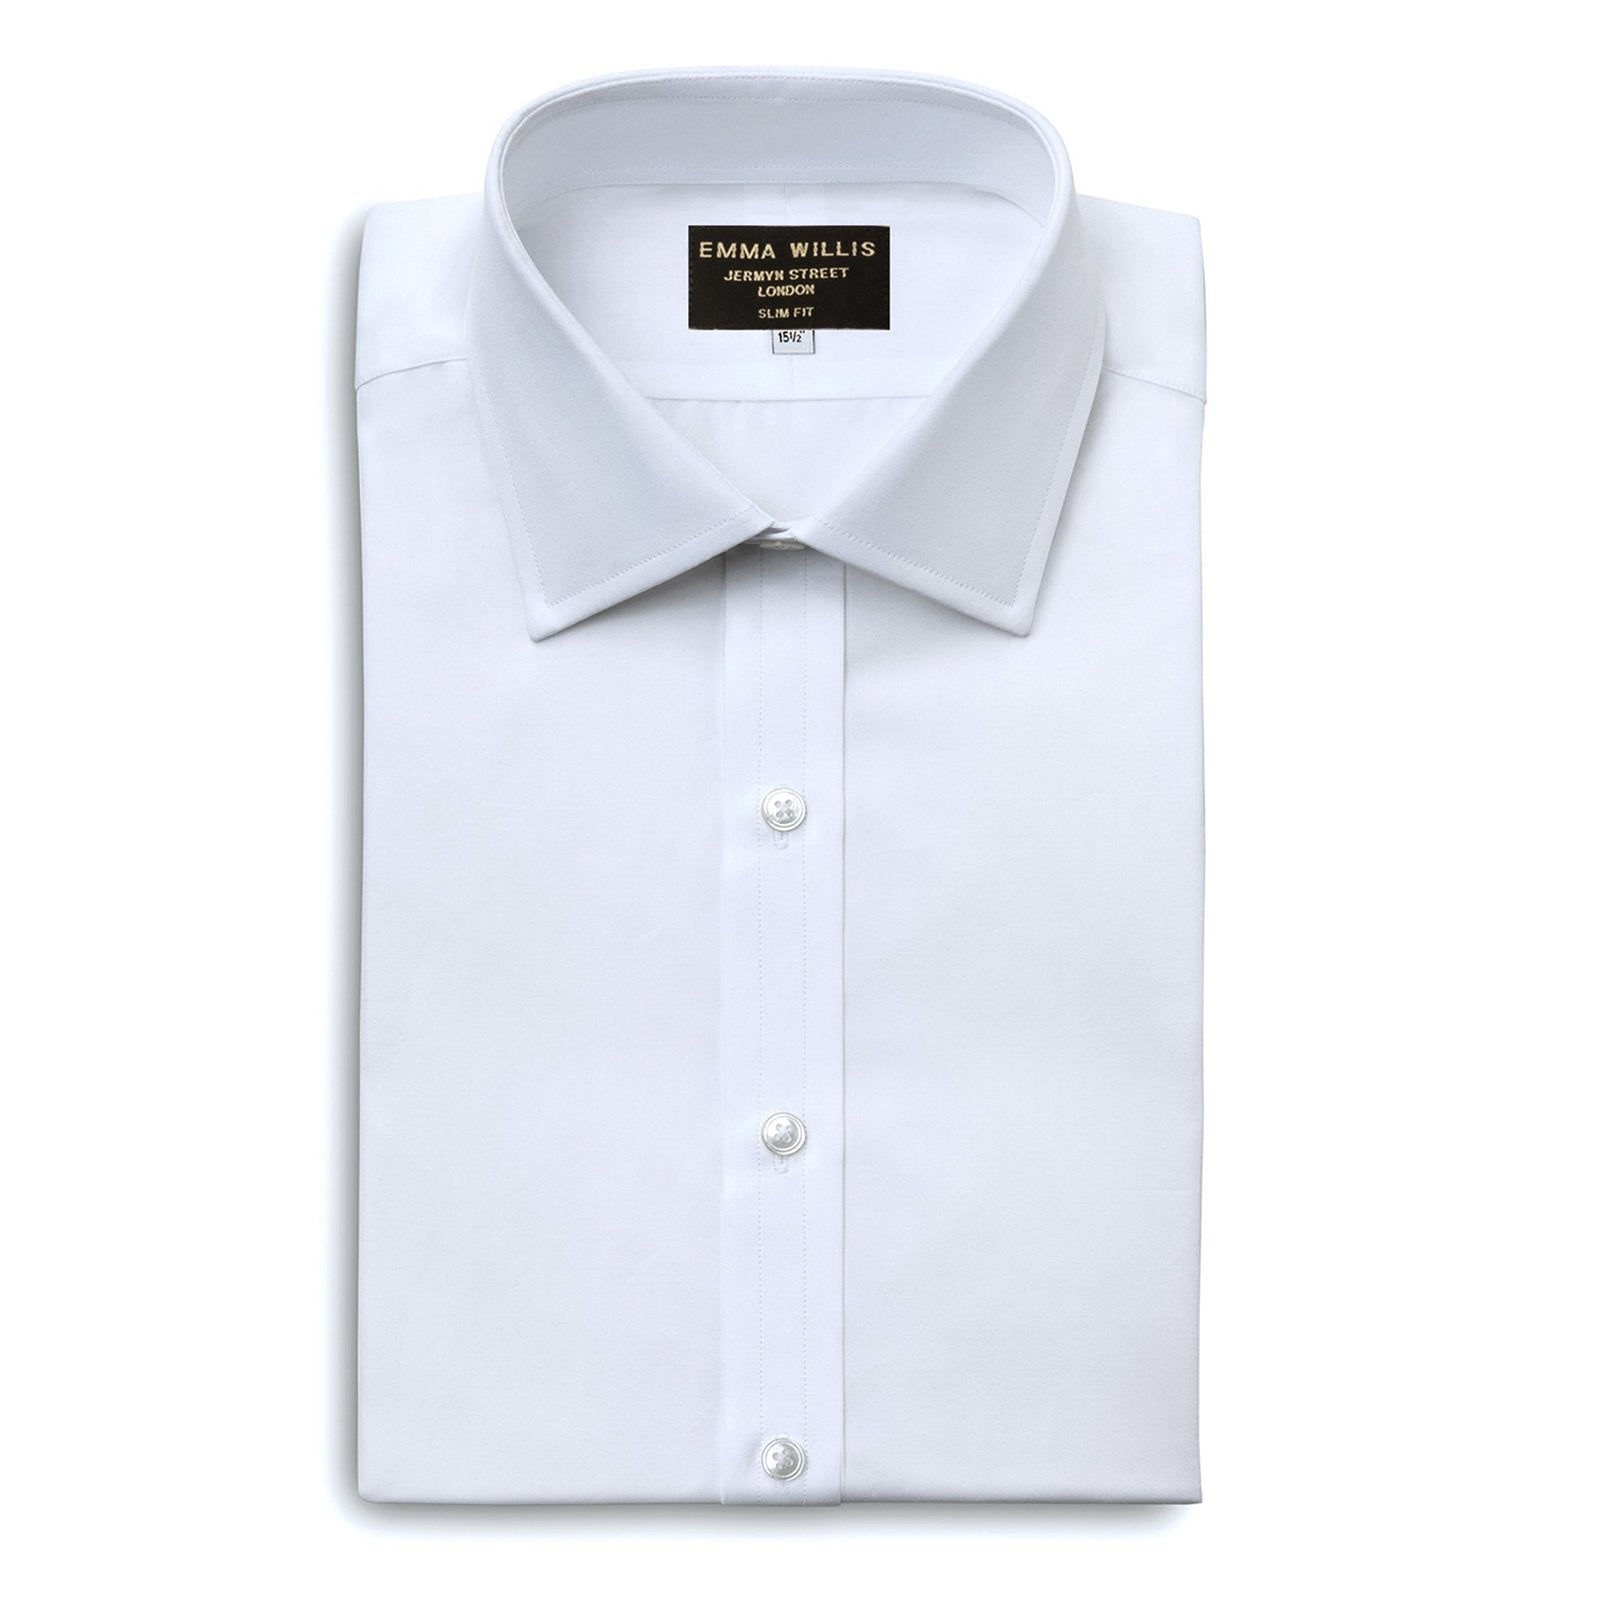 White Superior Cotton Shirt - Bespoke freeshipping - Emma Willis